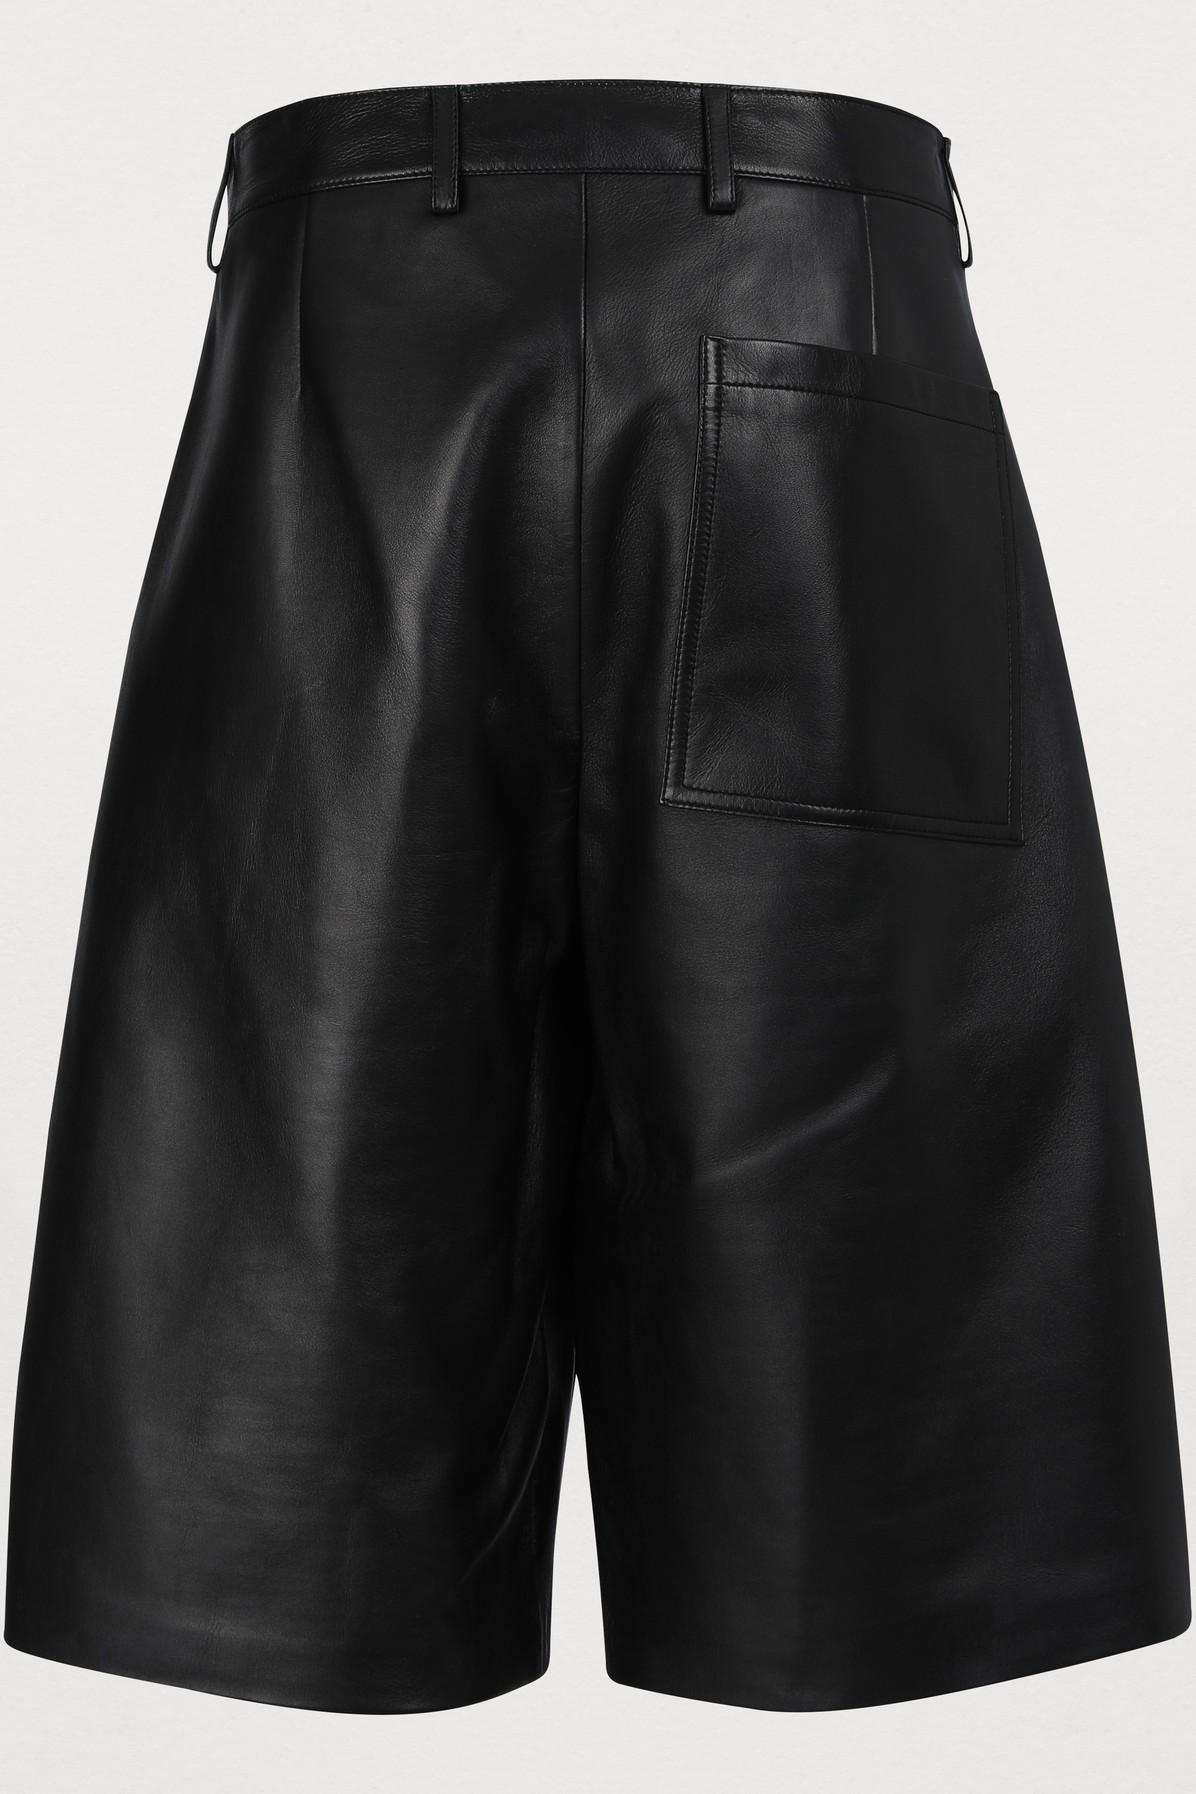 Bottega Veneta Shorts in Black - Lyst